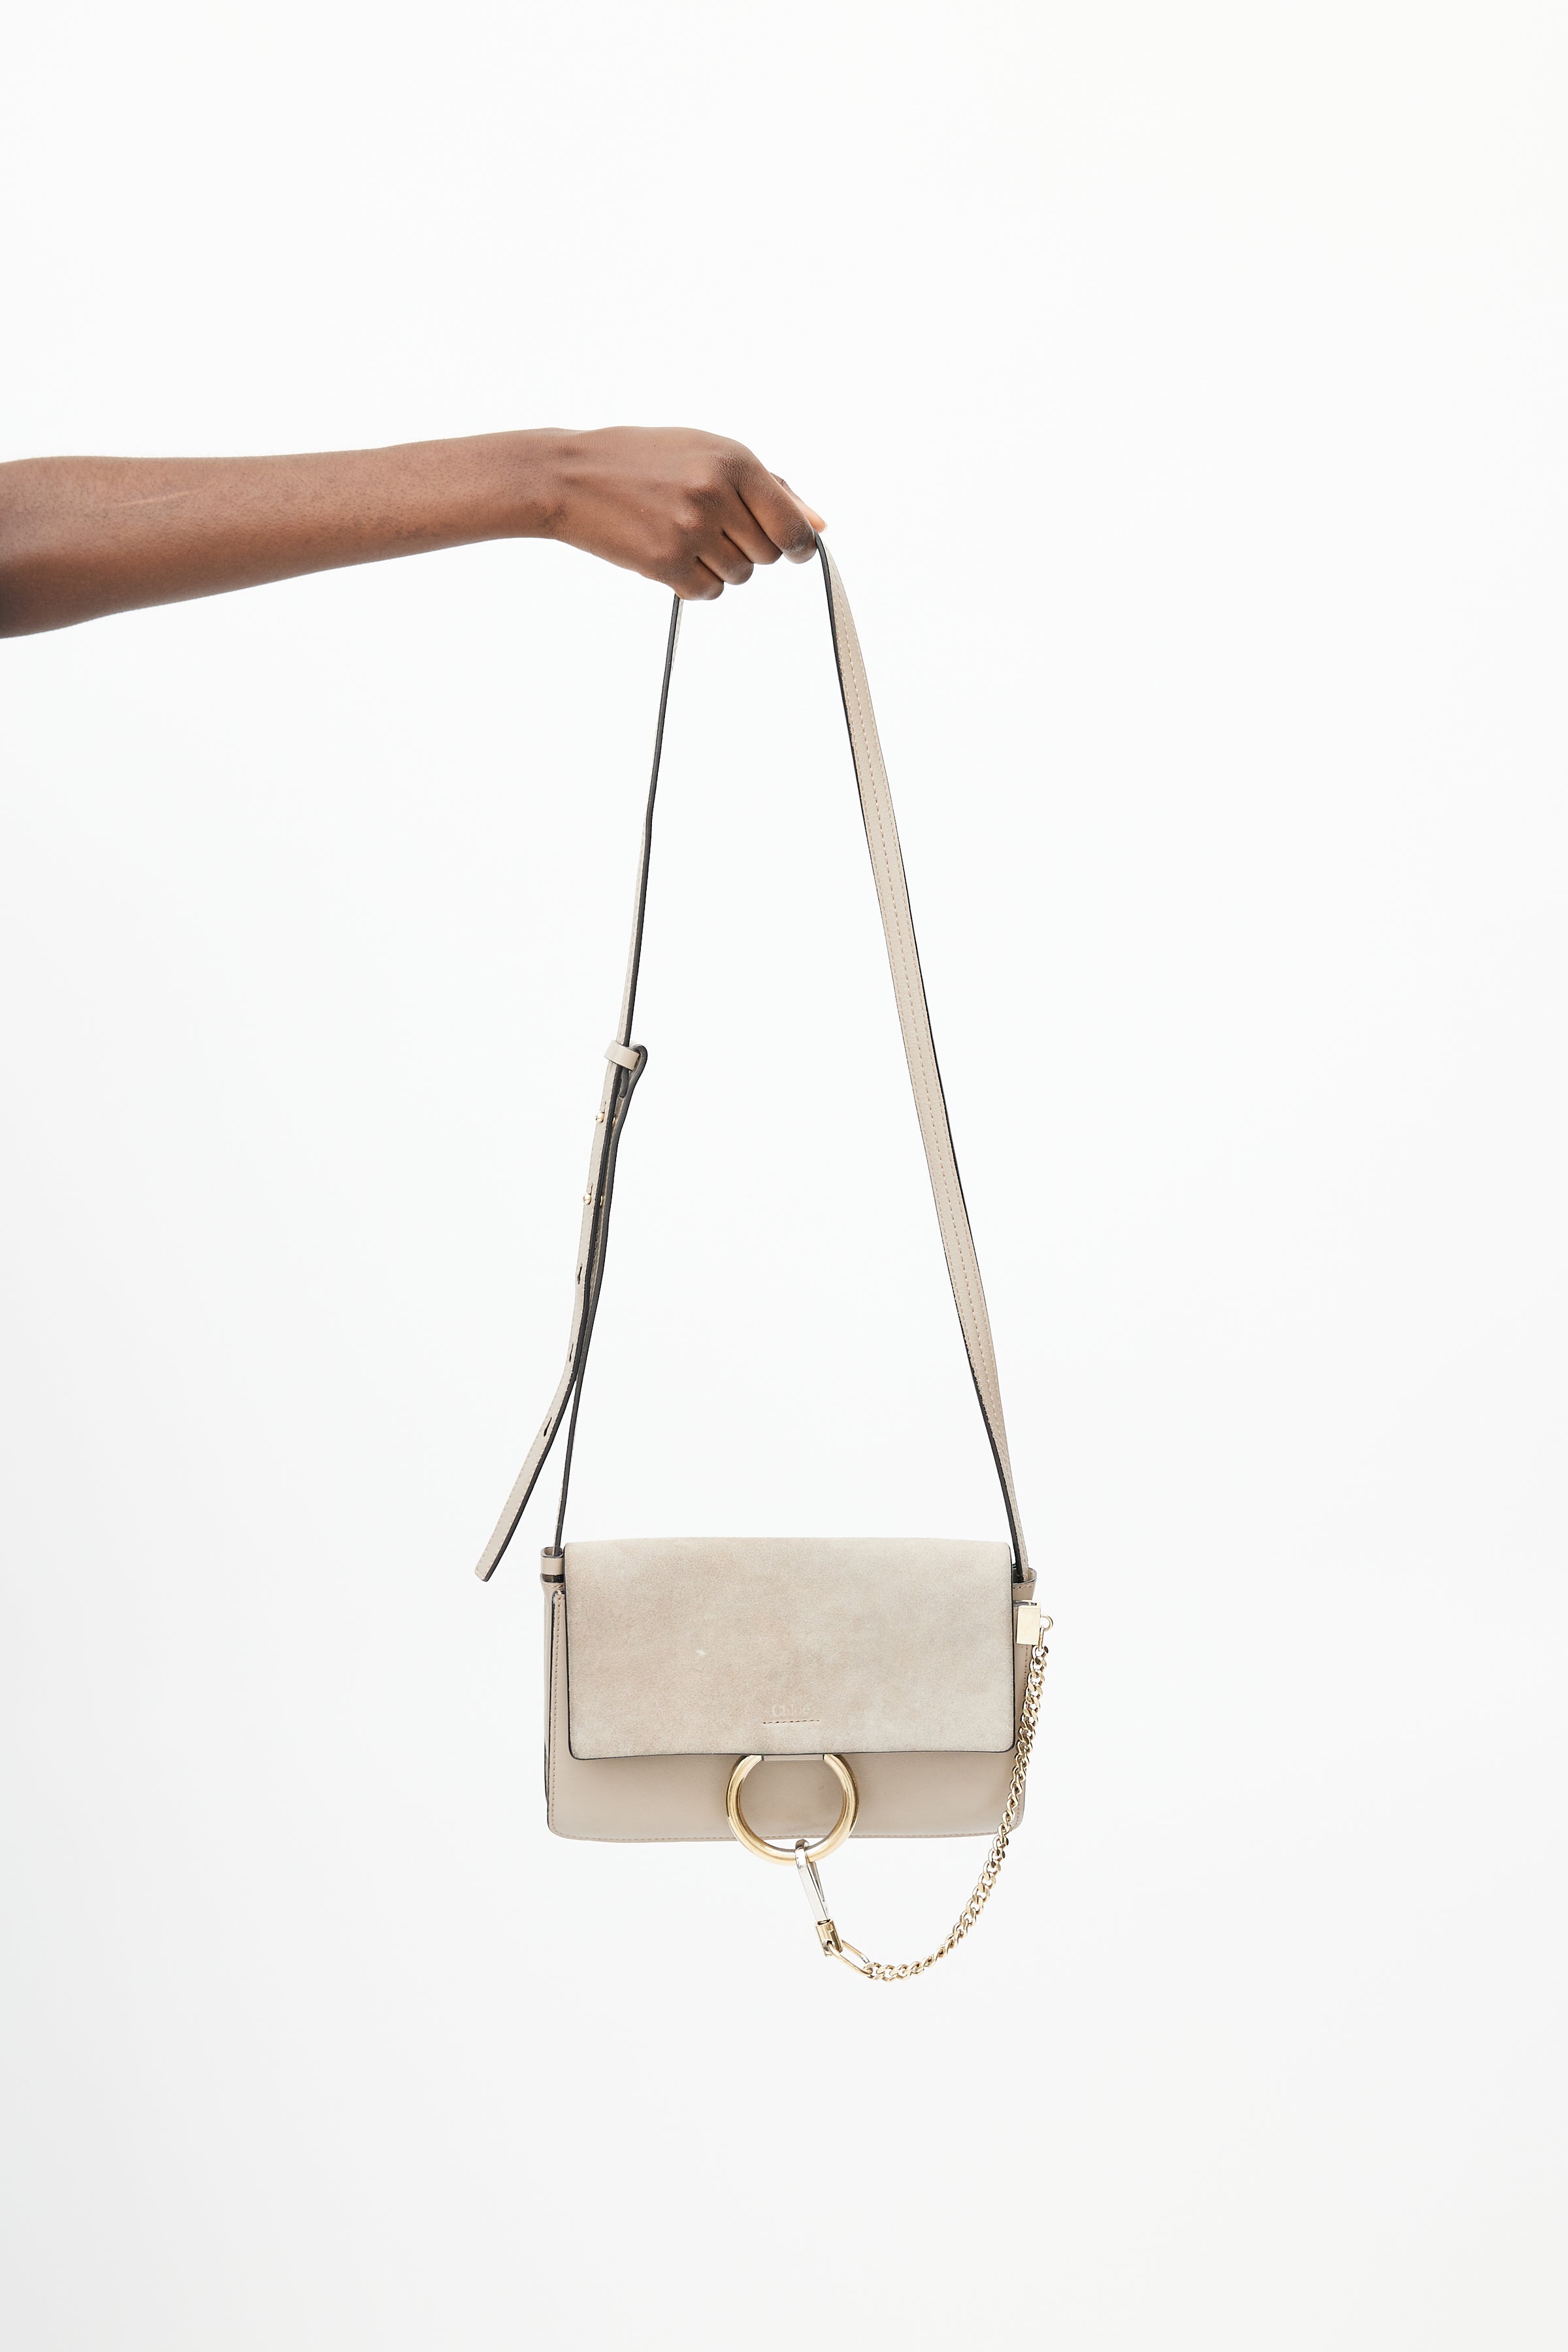 Chloé 'Faye Day' shoulder bag, Women's Bags